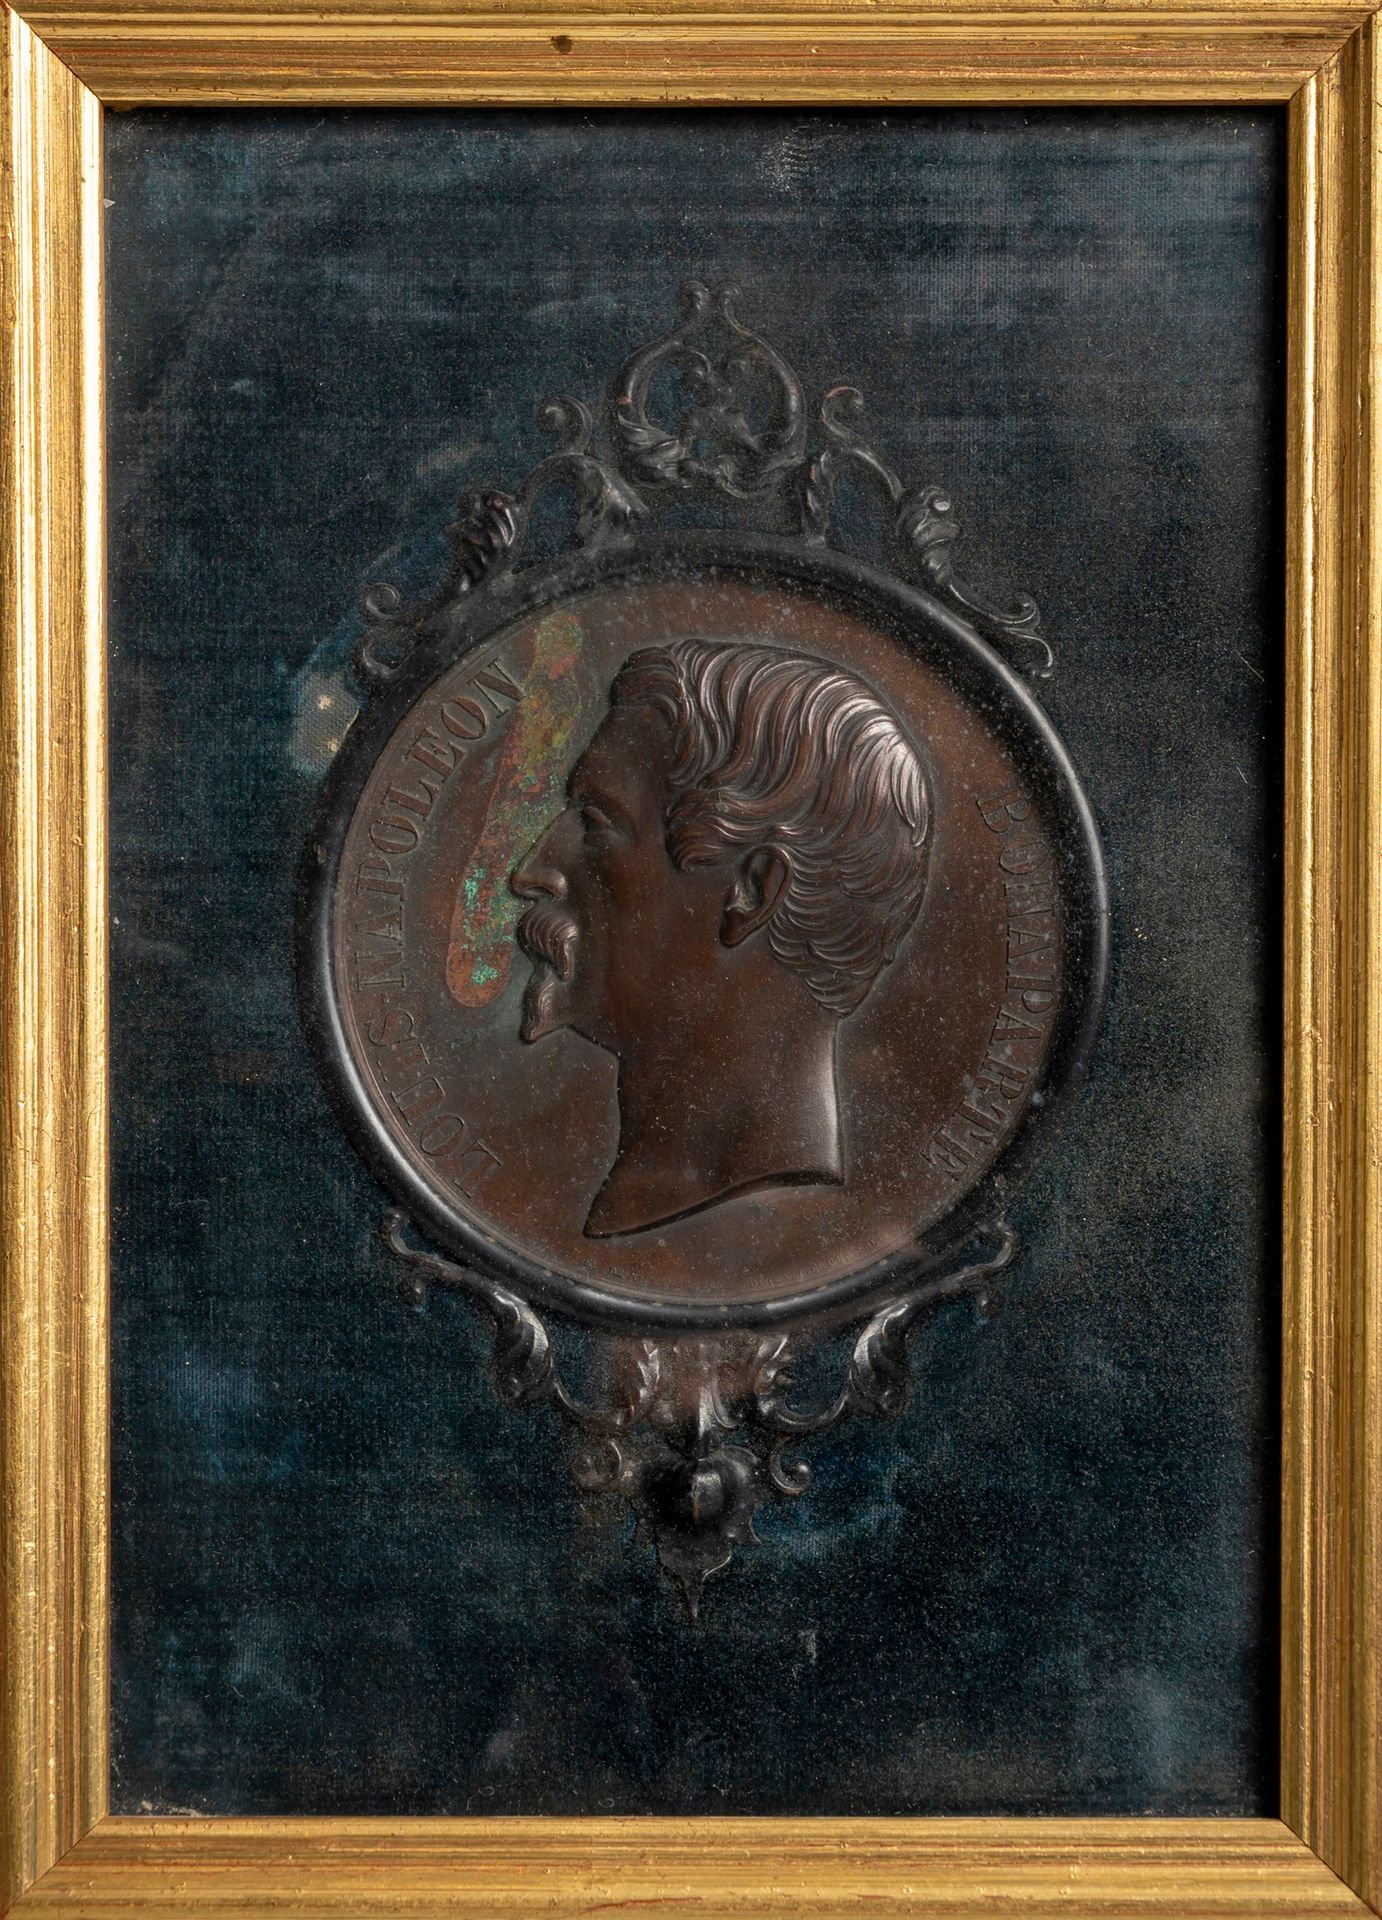 Null Louis Napoleon Bonaparte

XIXth century

Framed medal